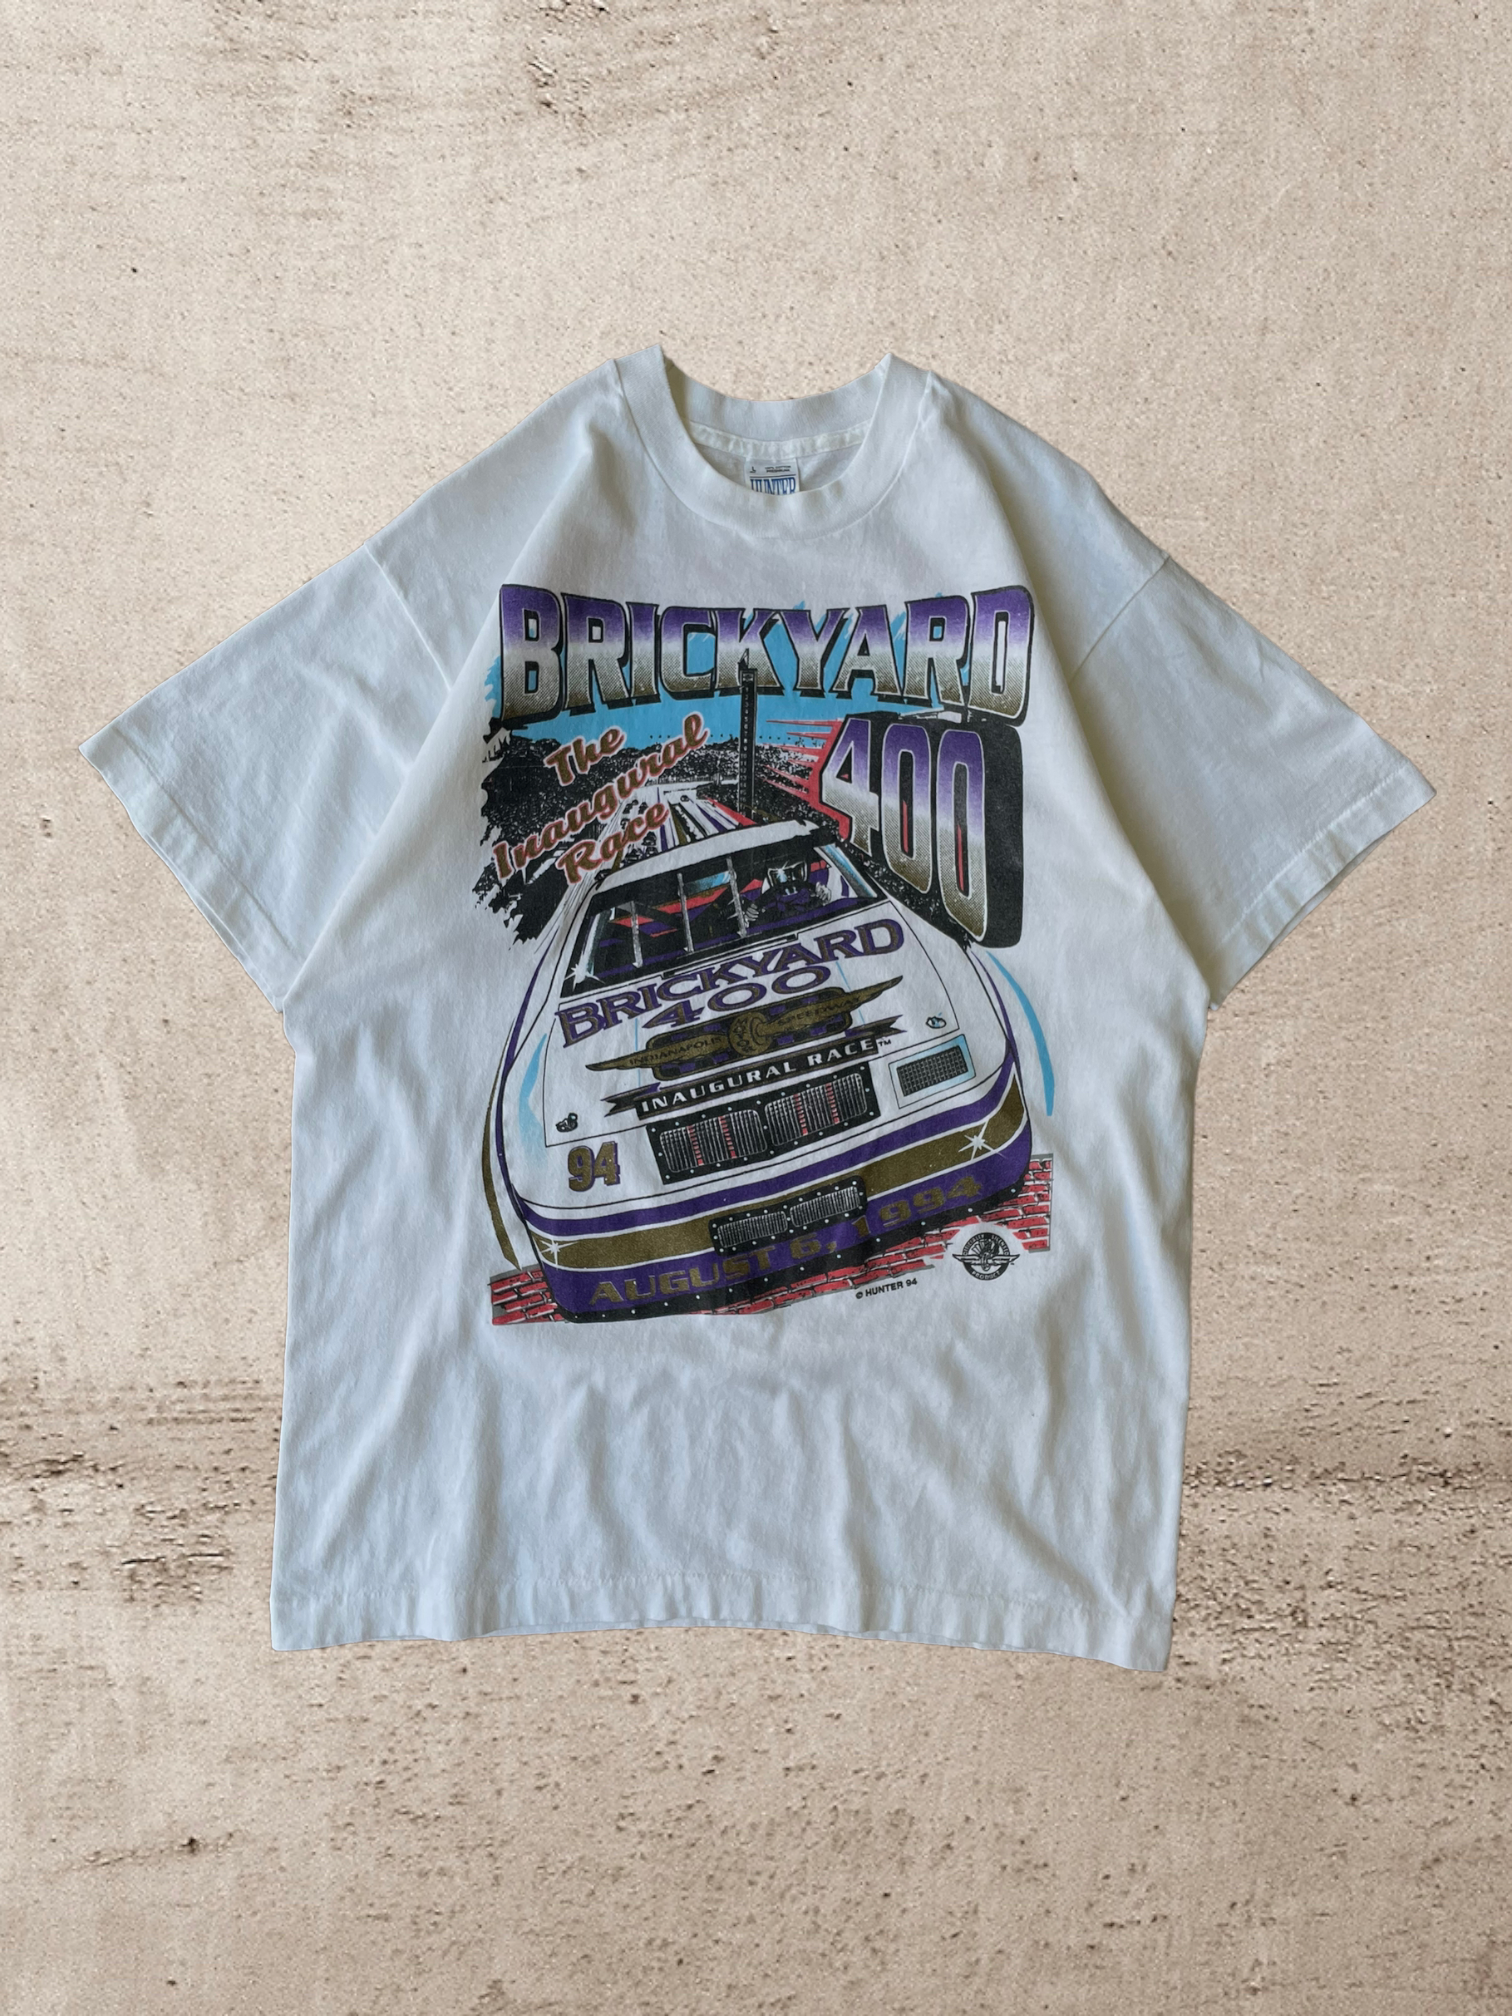 1994 Brickyard 400 Racing T-Shirt - Large